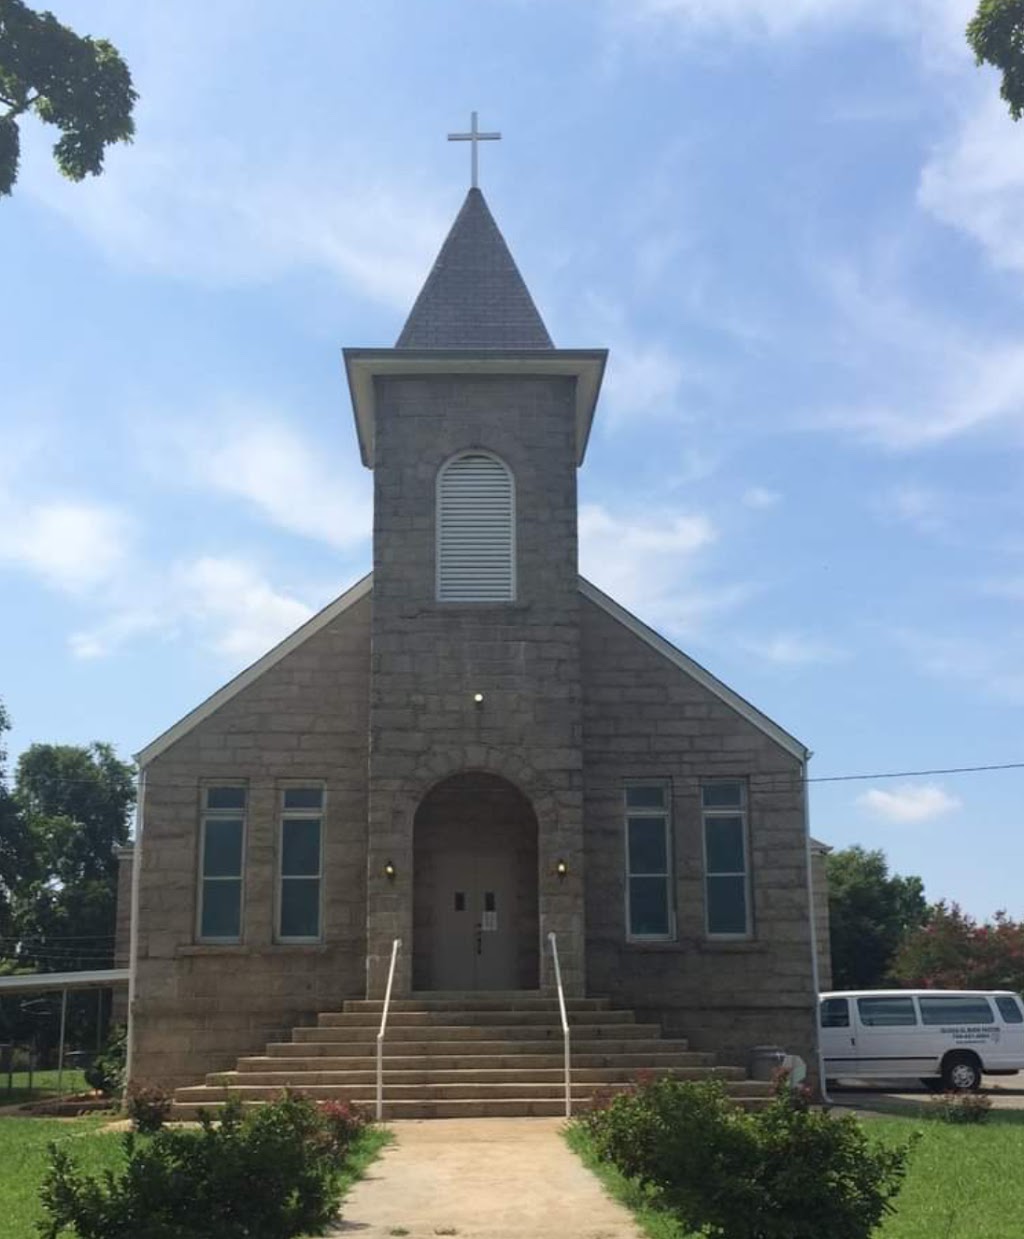 Iglesia El Buen Pastor A.D. | 2728 Cottage St, Salisbury, NC 28147, USA | Phone: (704) 212-8871